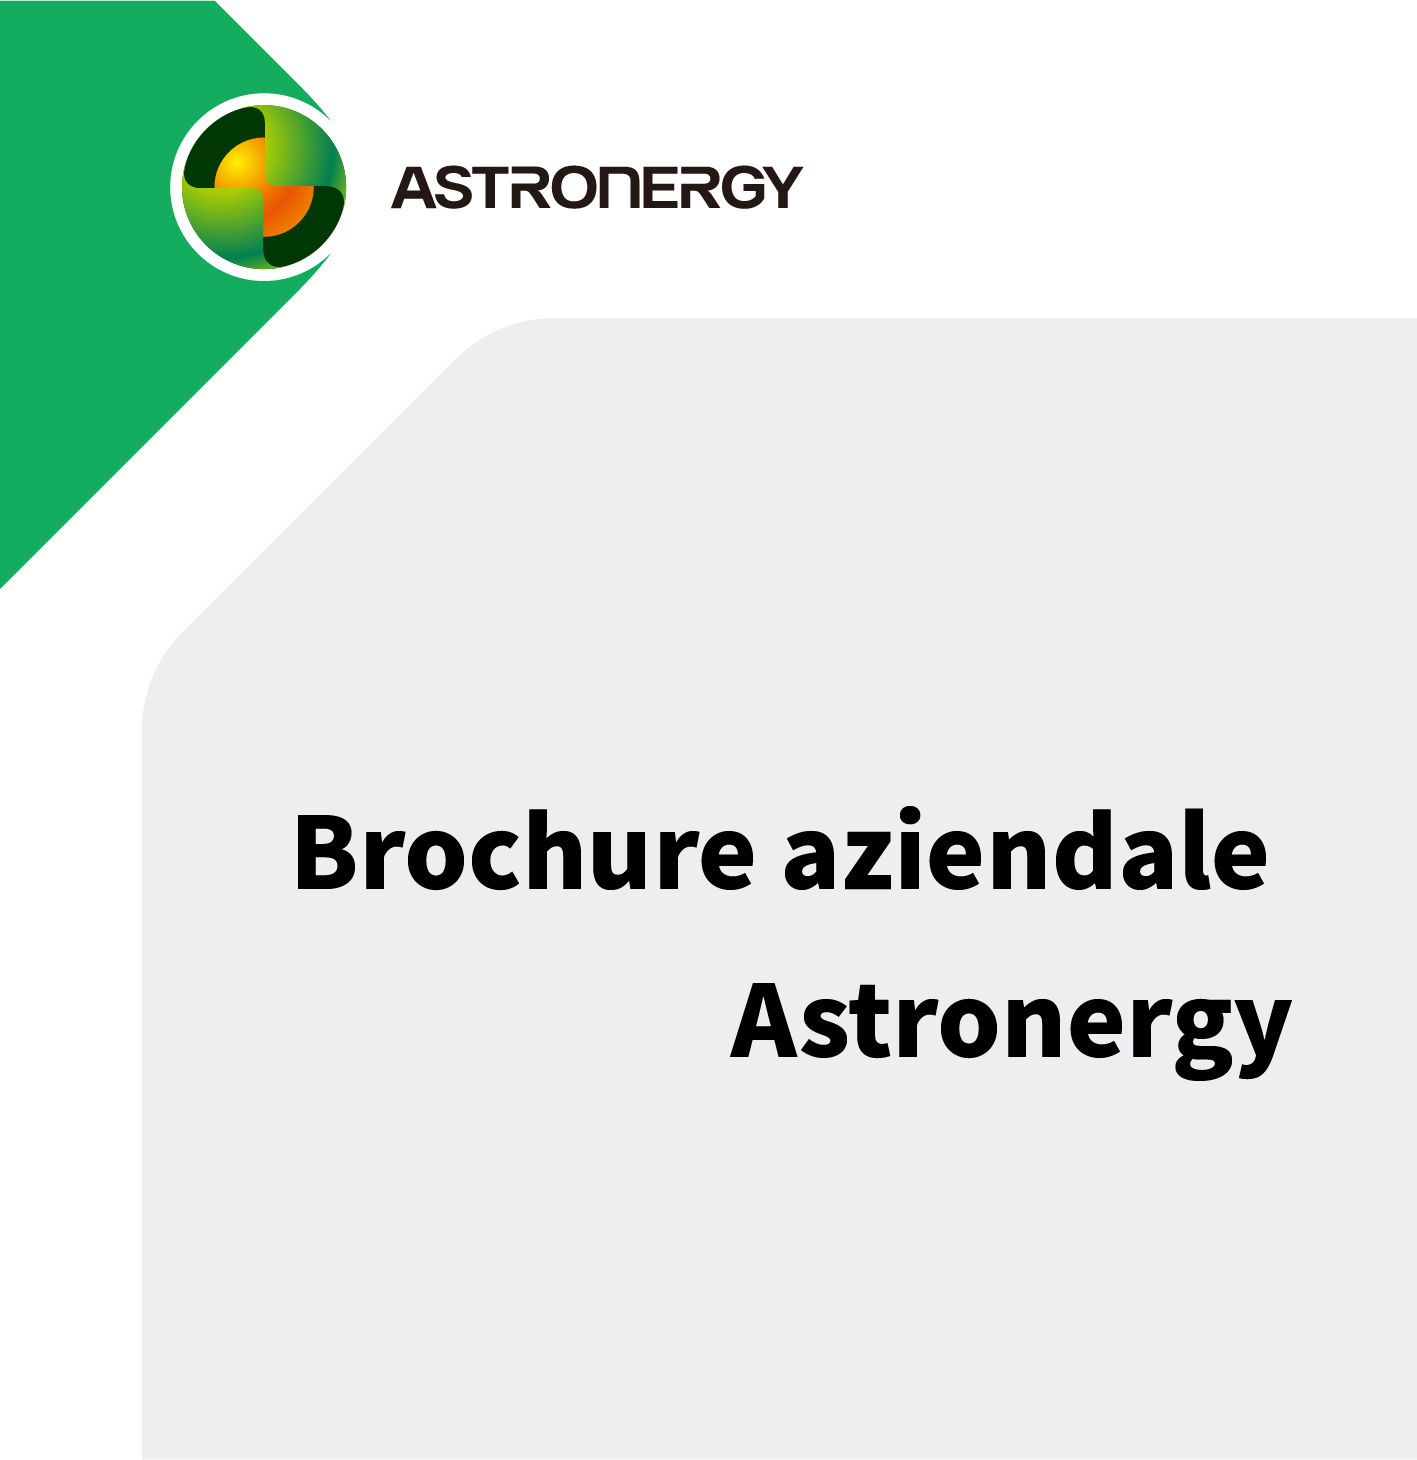 Brochure aziendale Astronergy